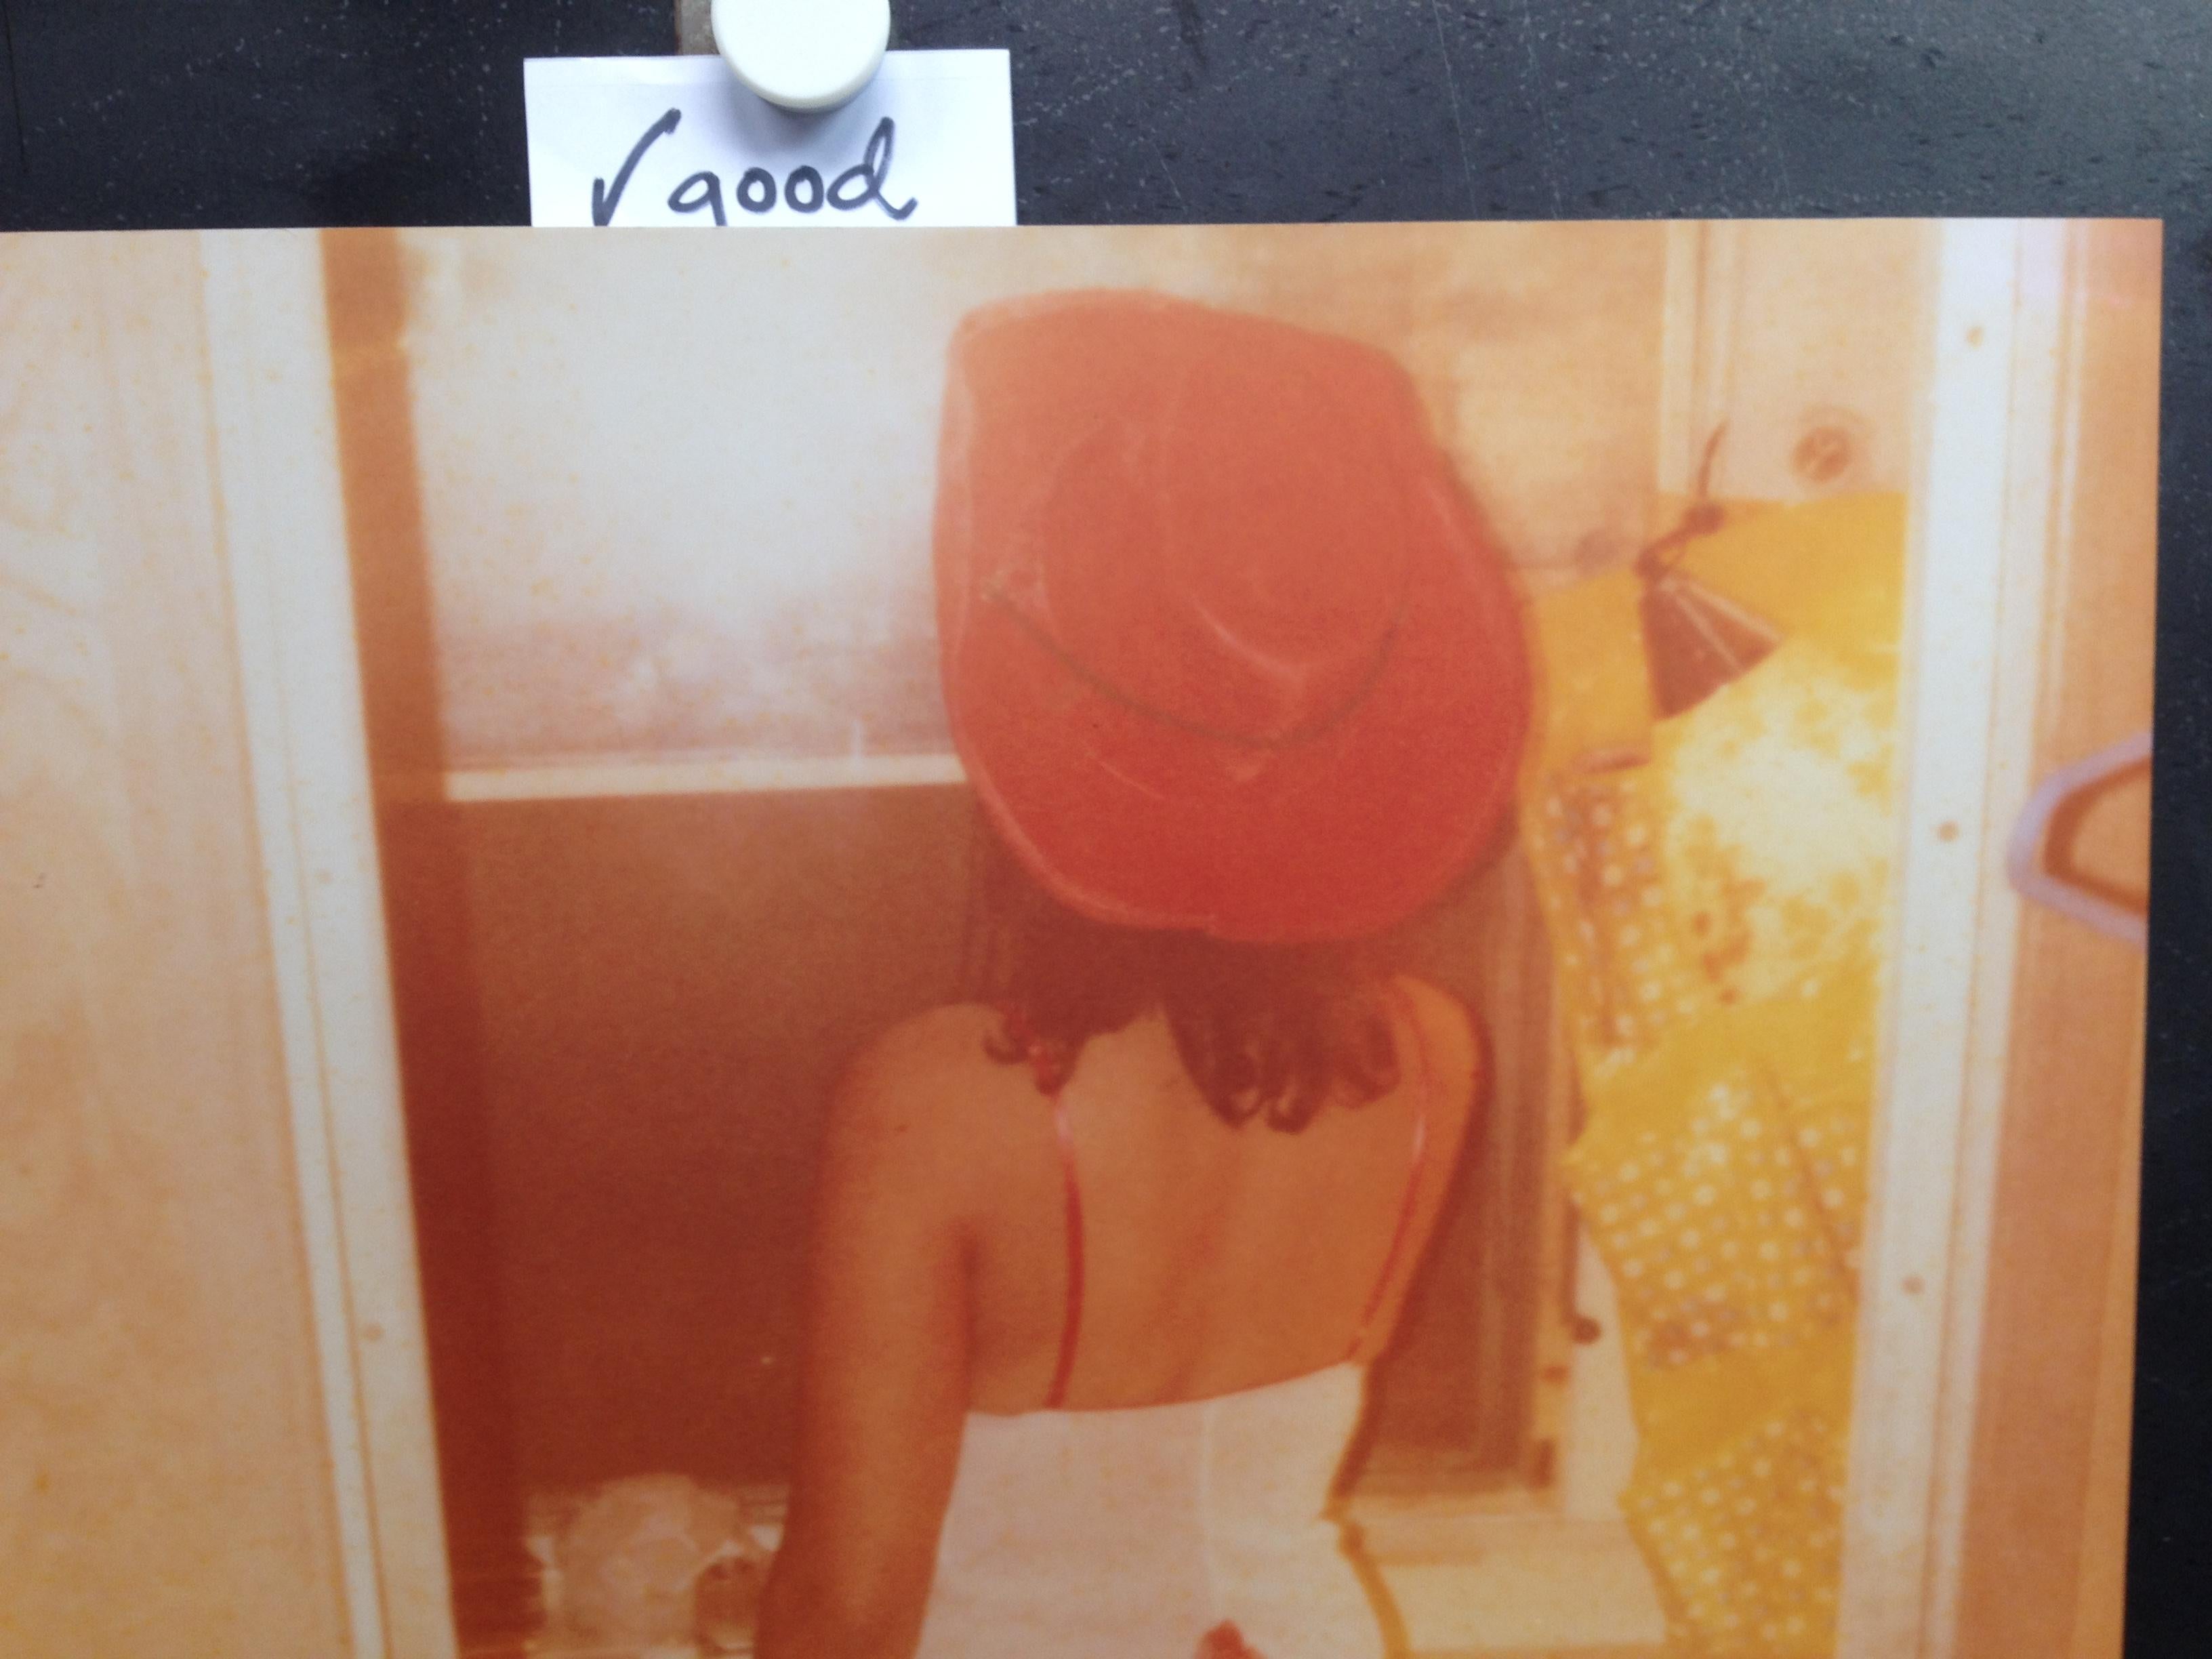 'Margarita smokes in Bathroom' (Till Death do us Part) - Polaroid, Contemporary - Brown Figurative Photograph by Stefanie Schneider